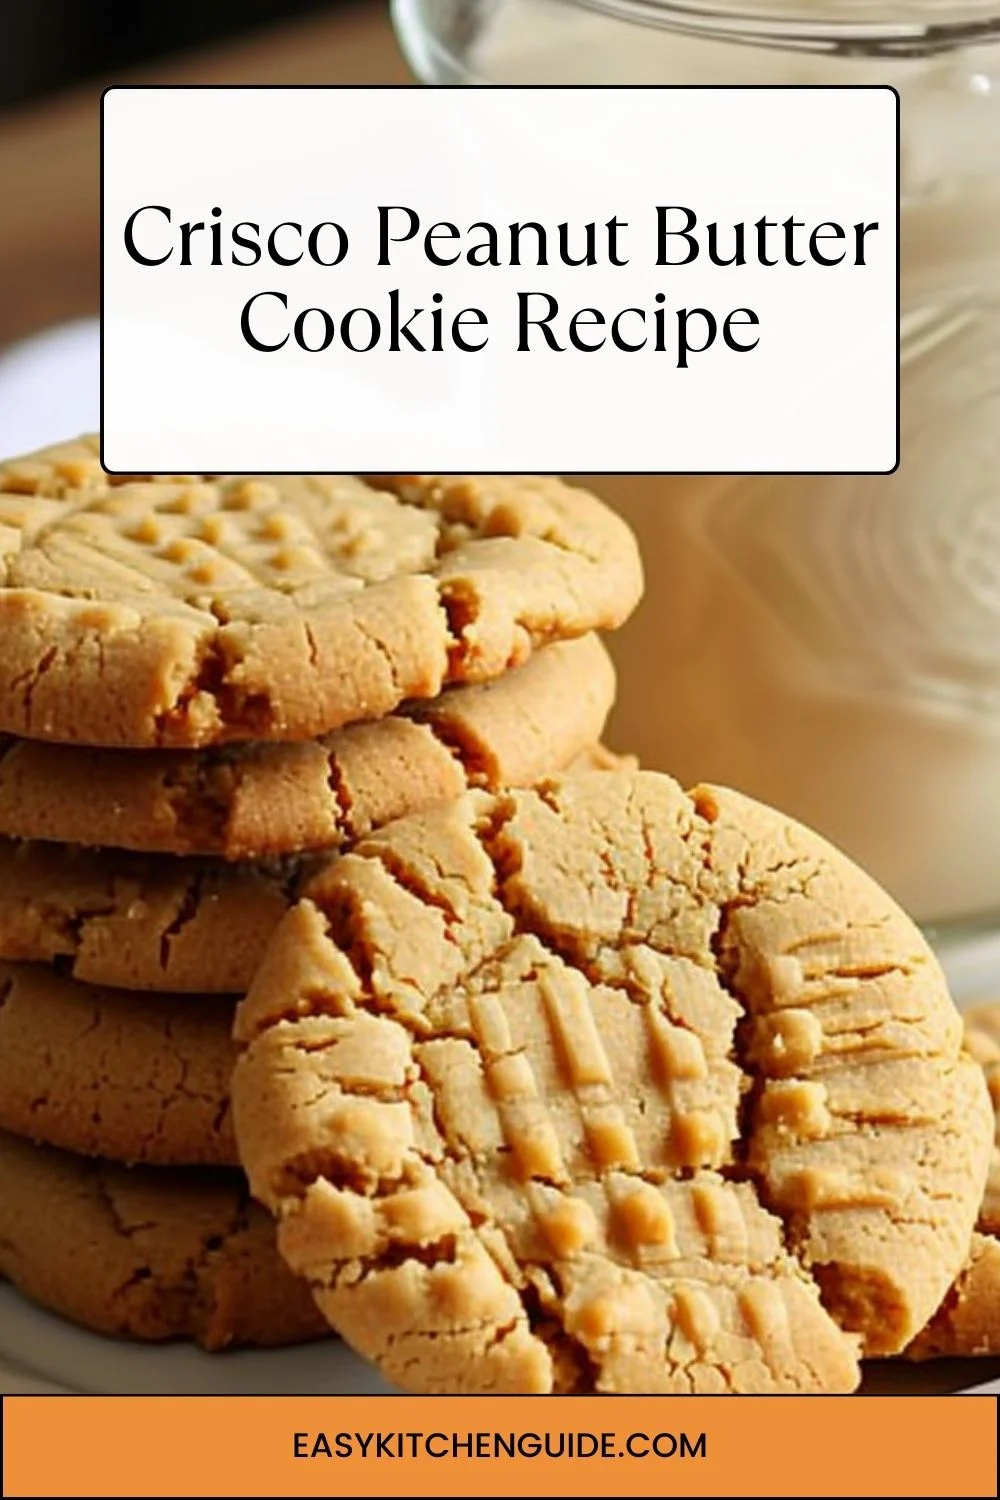 Crisco Peanut Butter Cookie Recipe